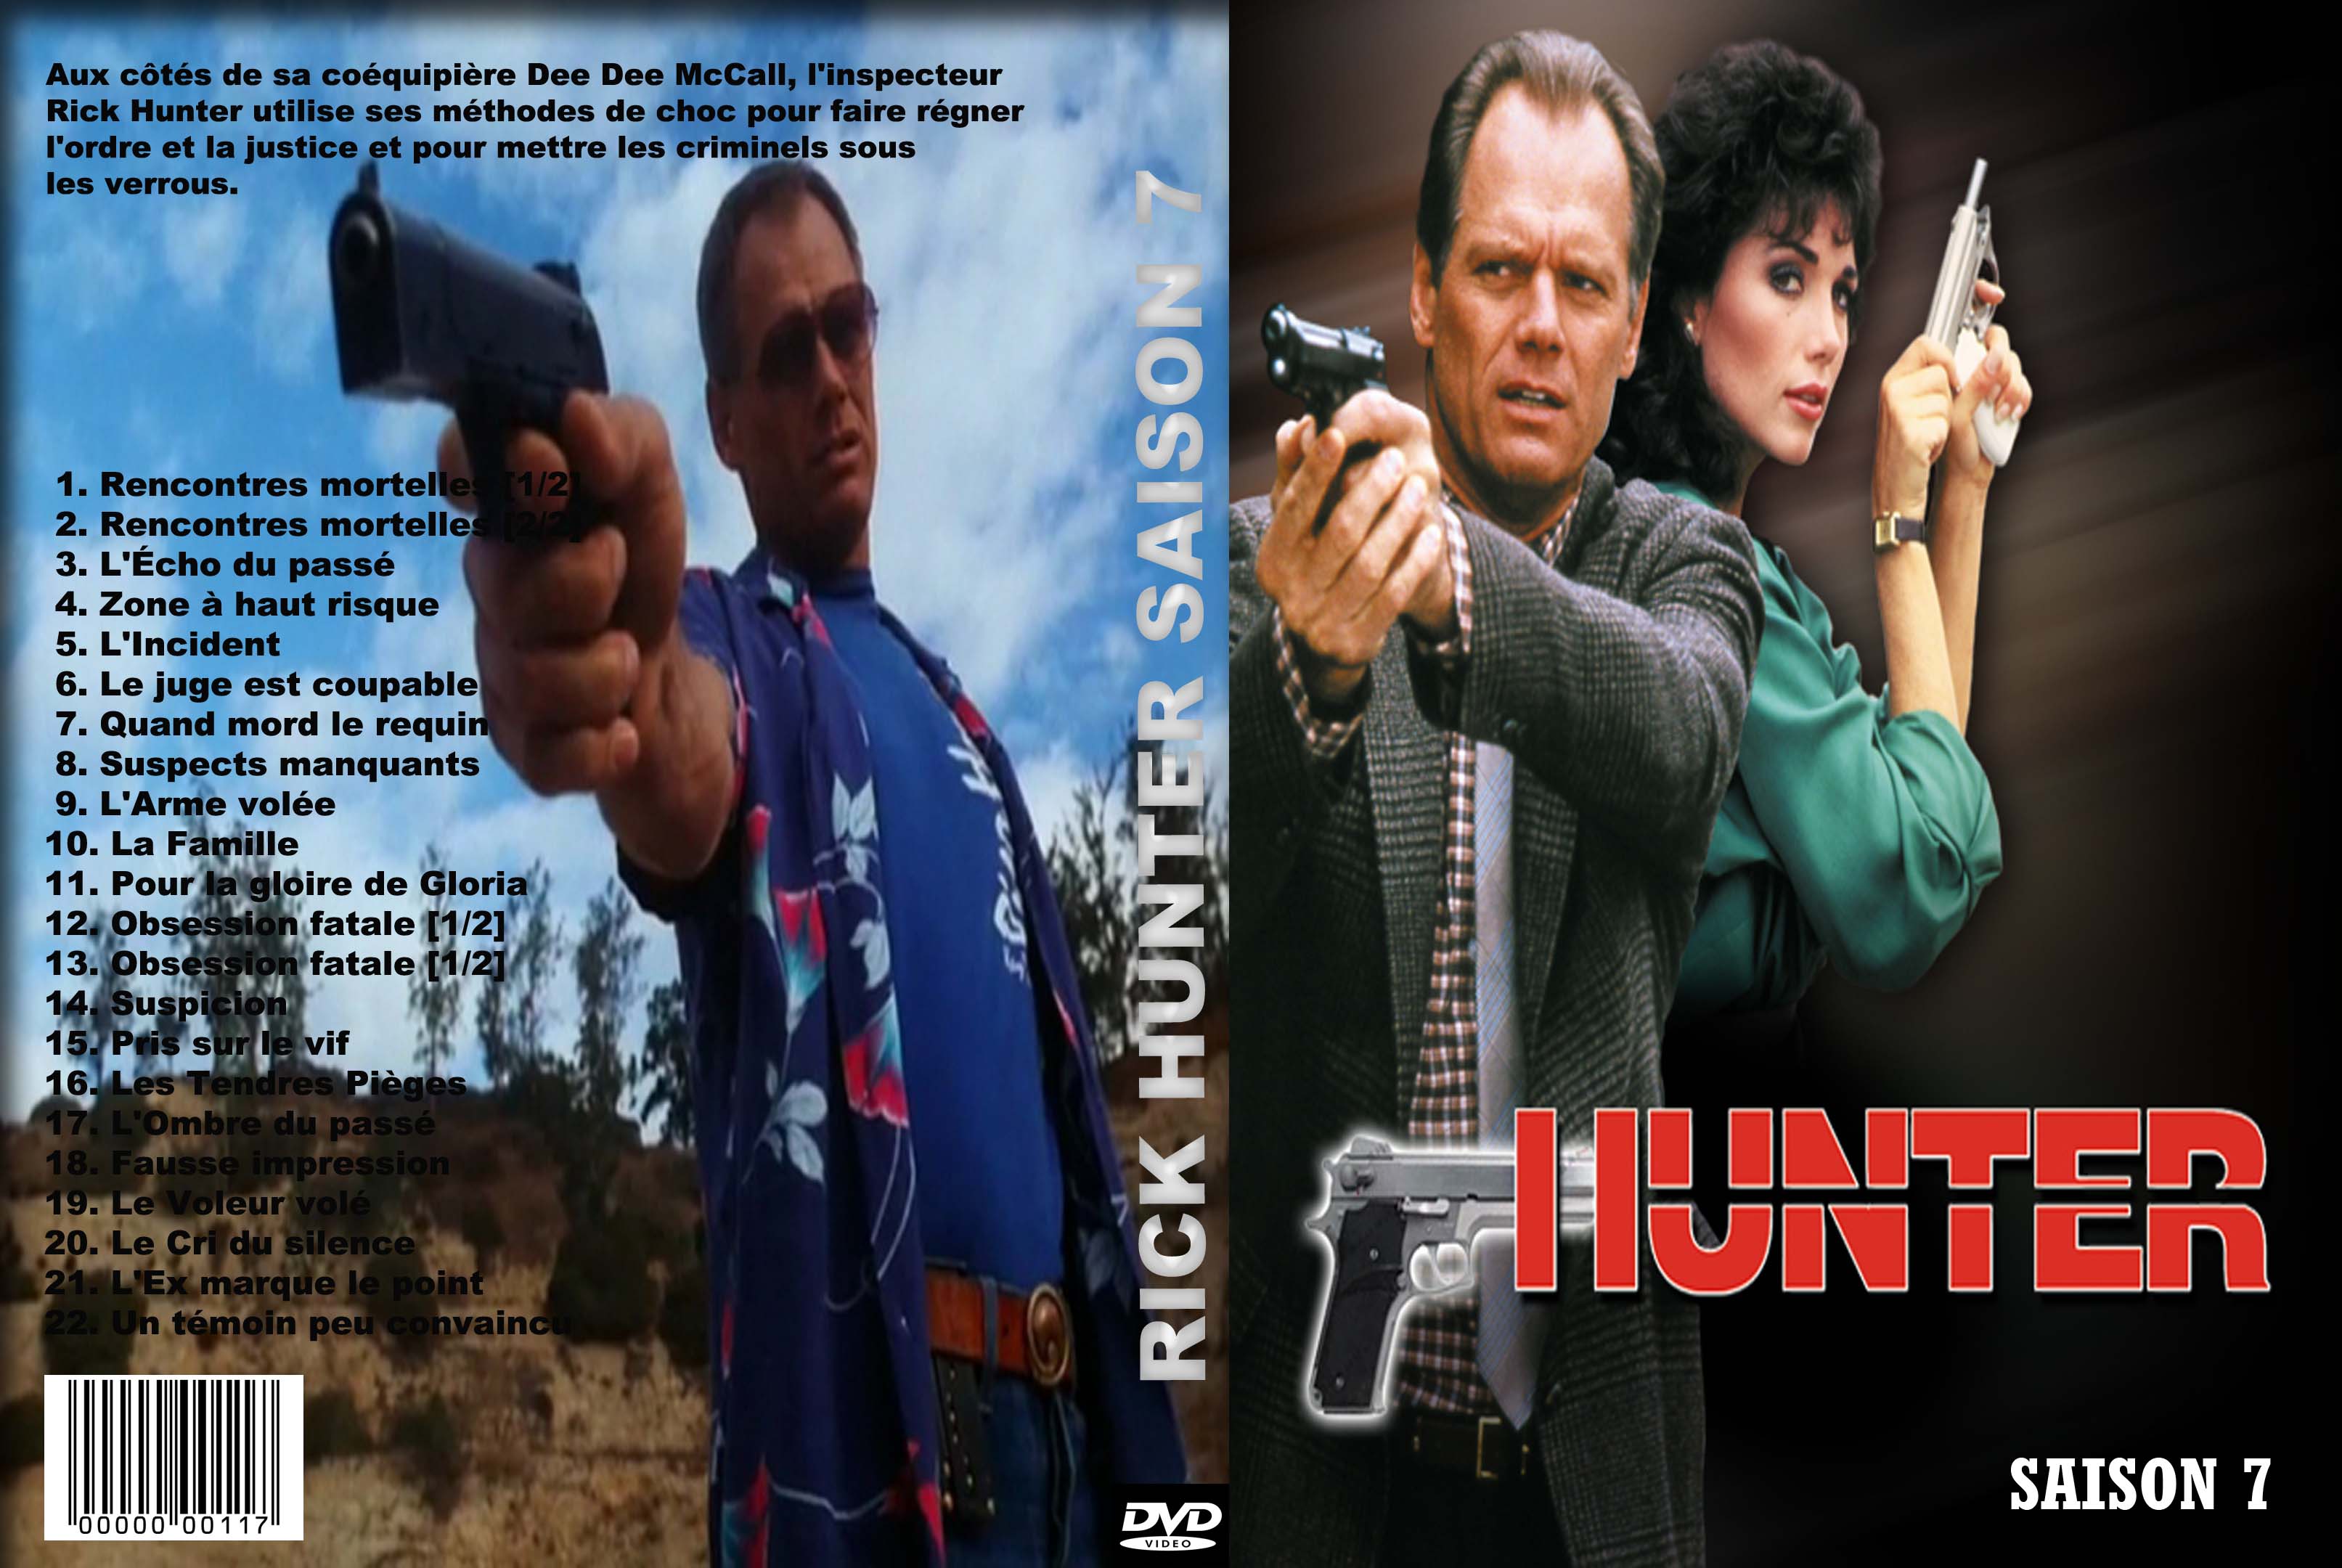 Jaquette DVD Rick Hunter Saison 7 custom